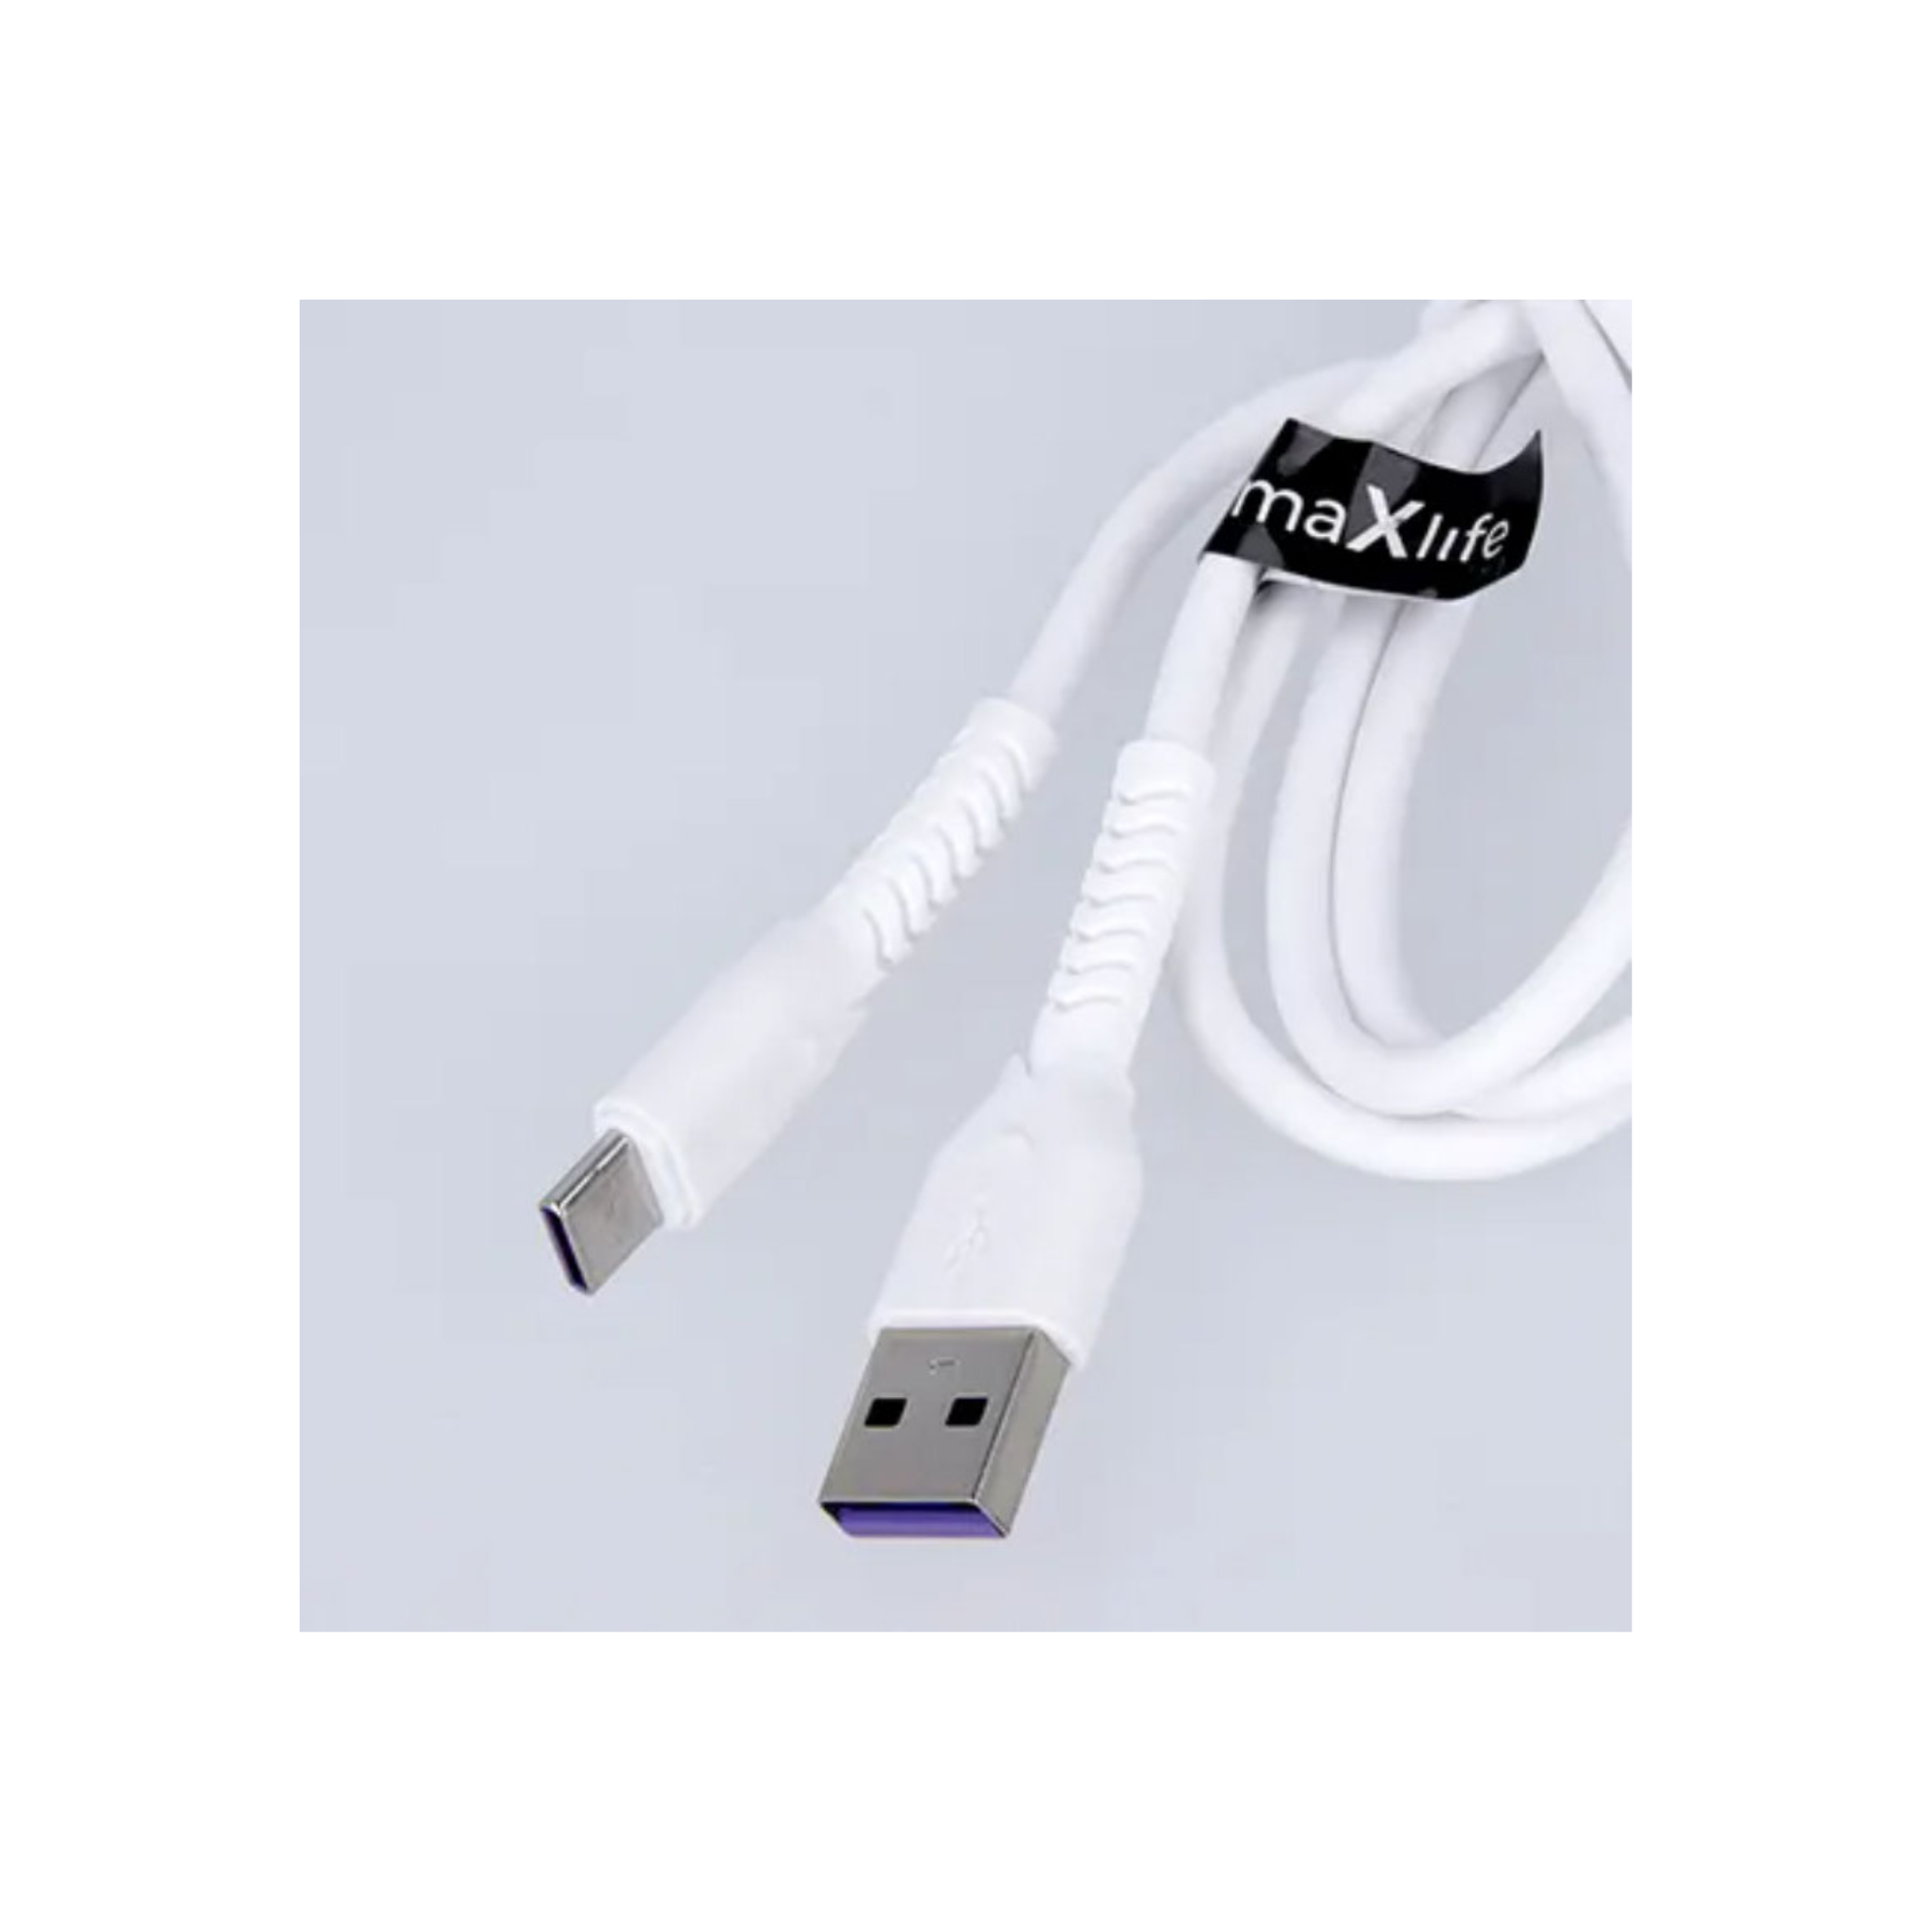 Maxlife iPhone 3a Lightening Cable